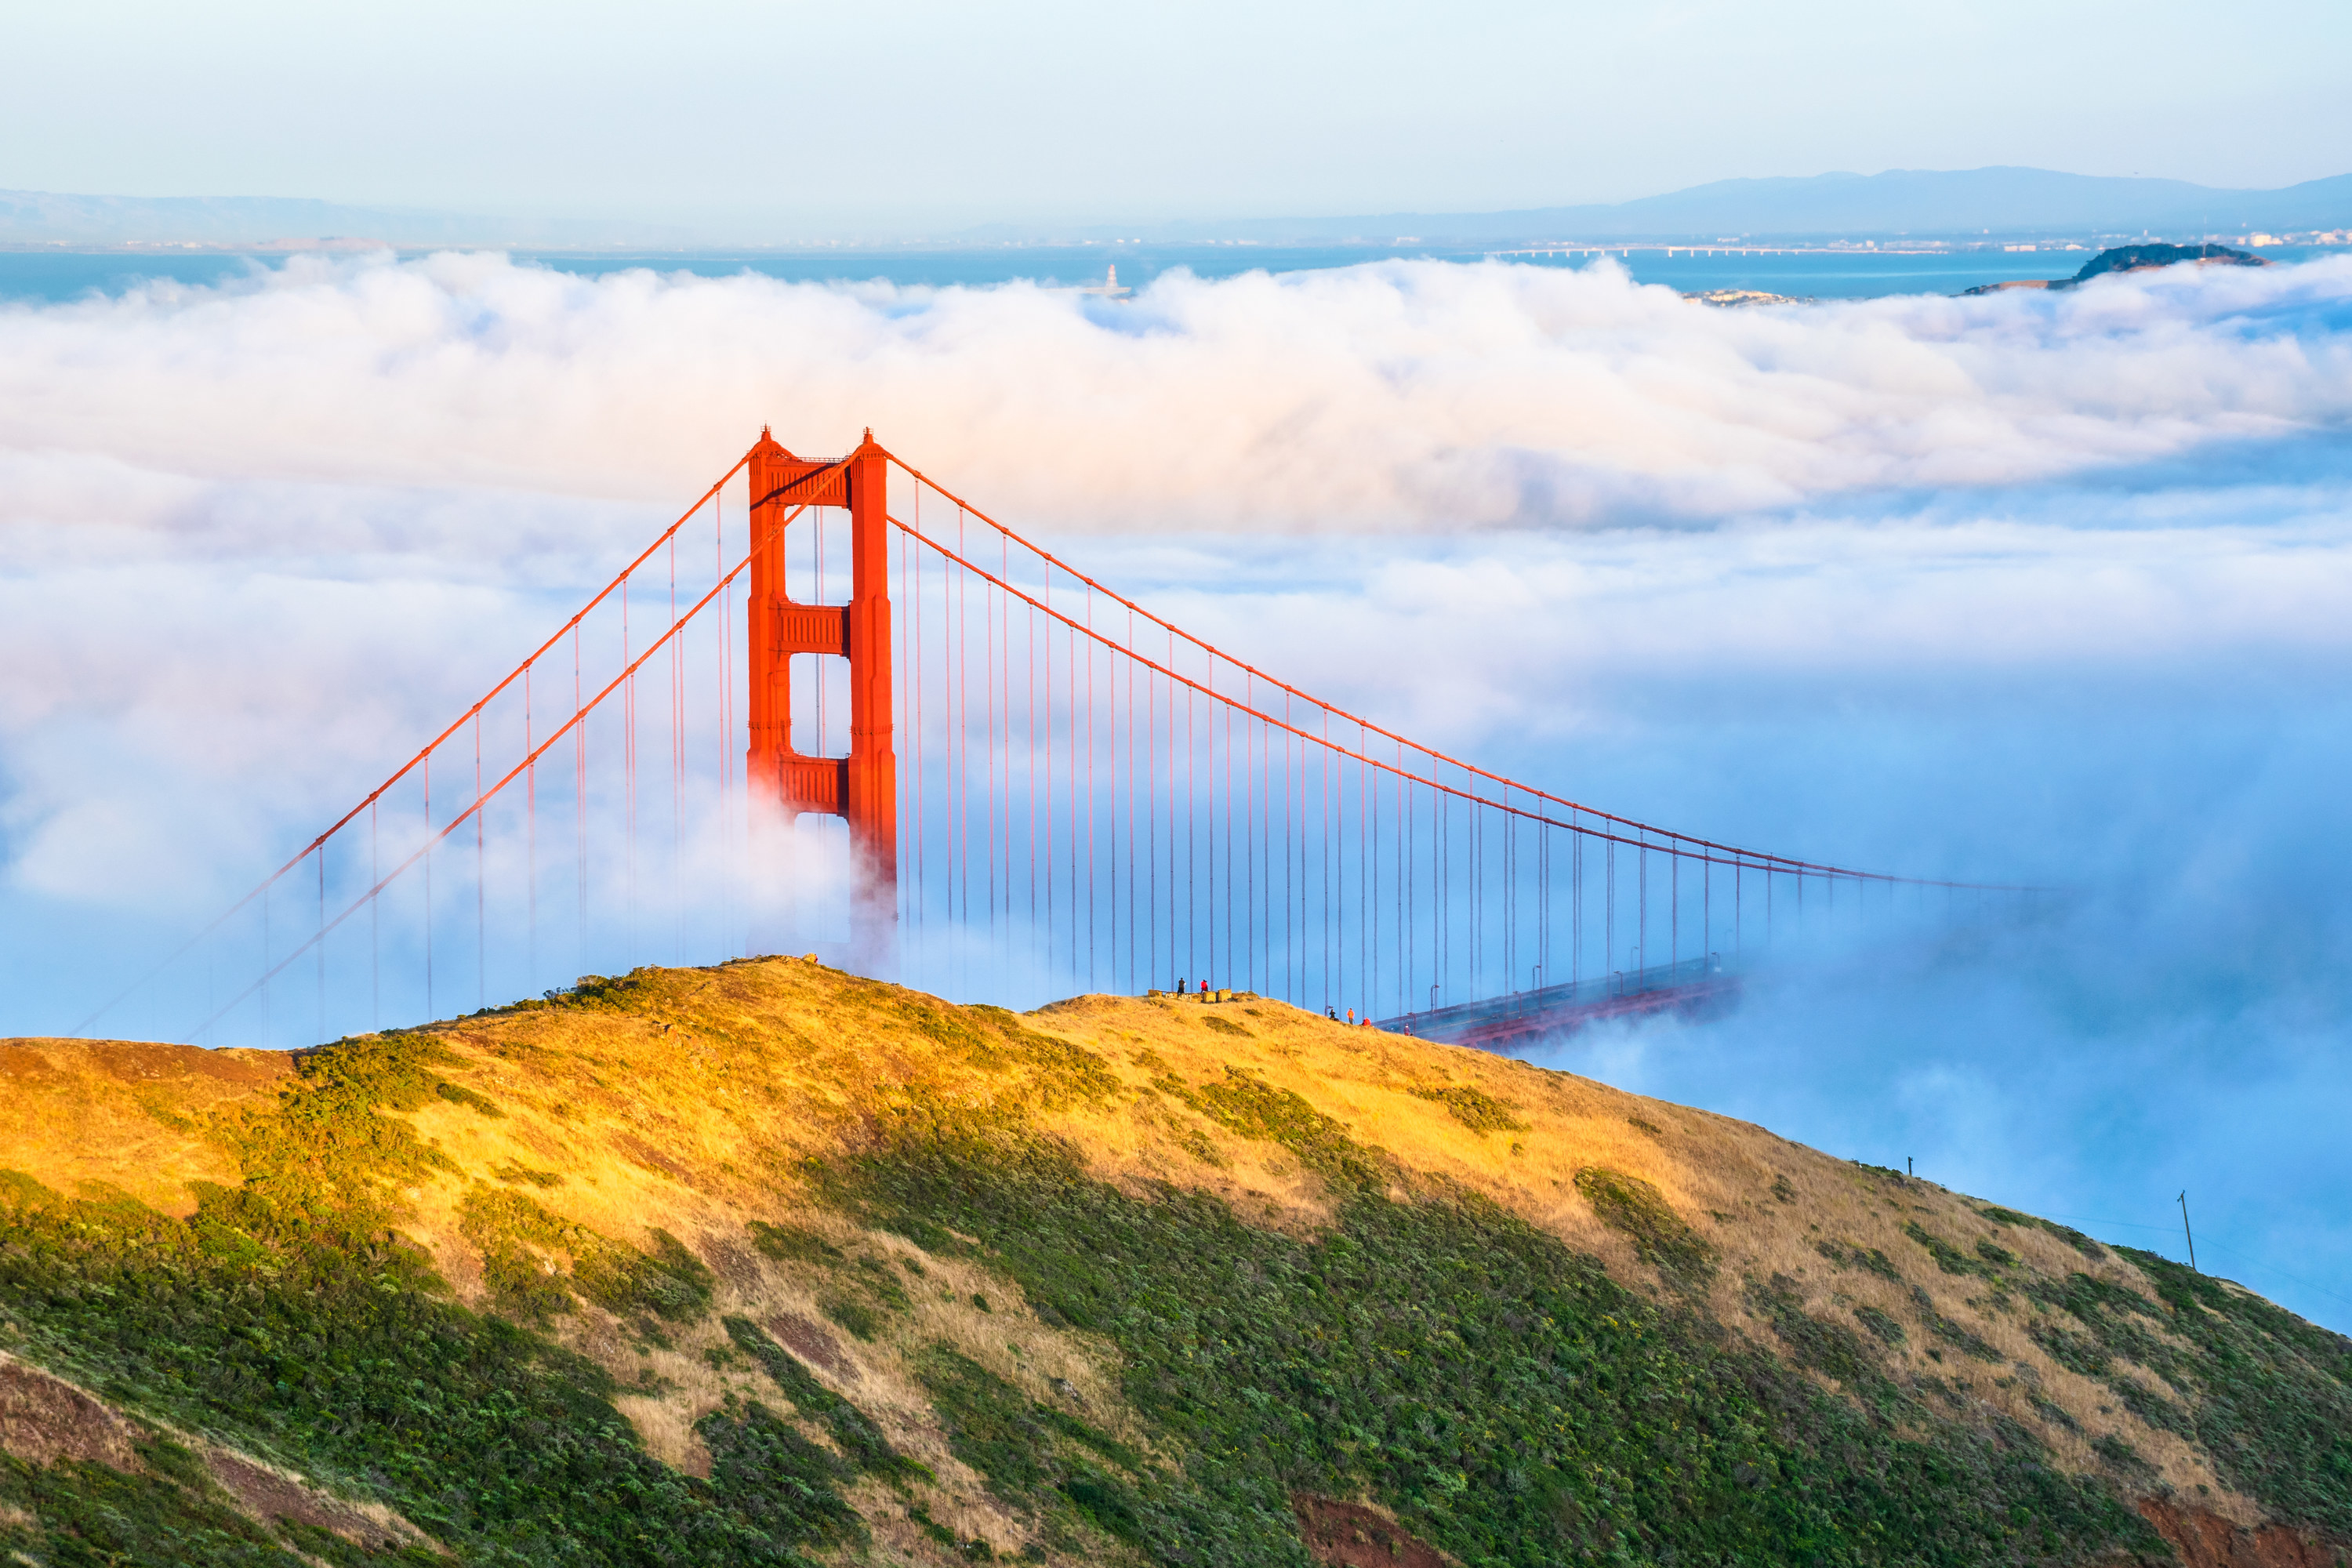 Fog flowing across the Golden Gate Bridge as seen from the Marin Headlands in San Francisco, California.